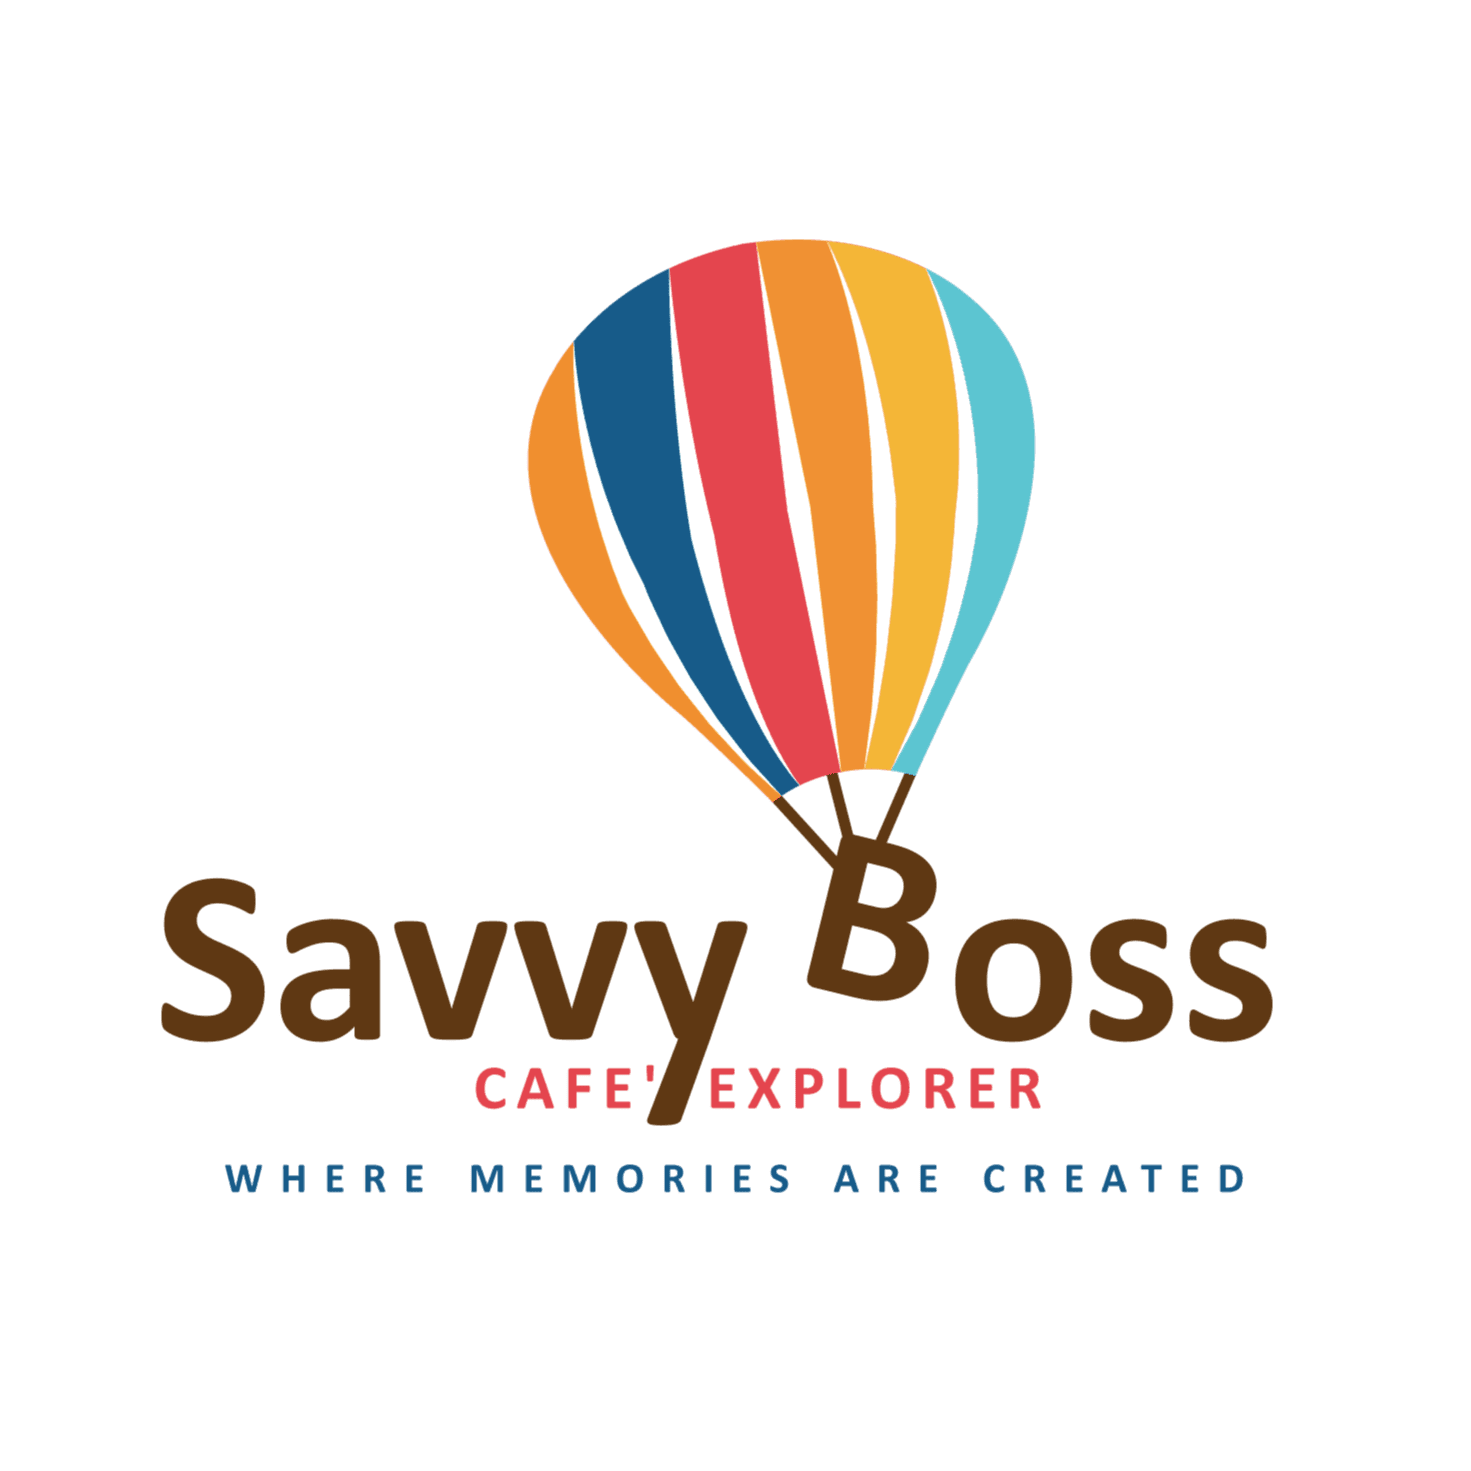 Savvy Boss Cafe' Explorer